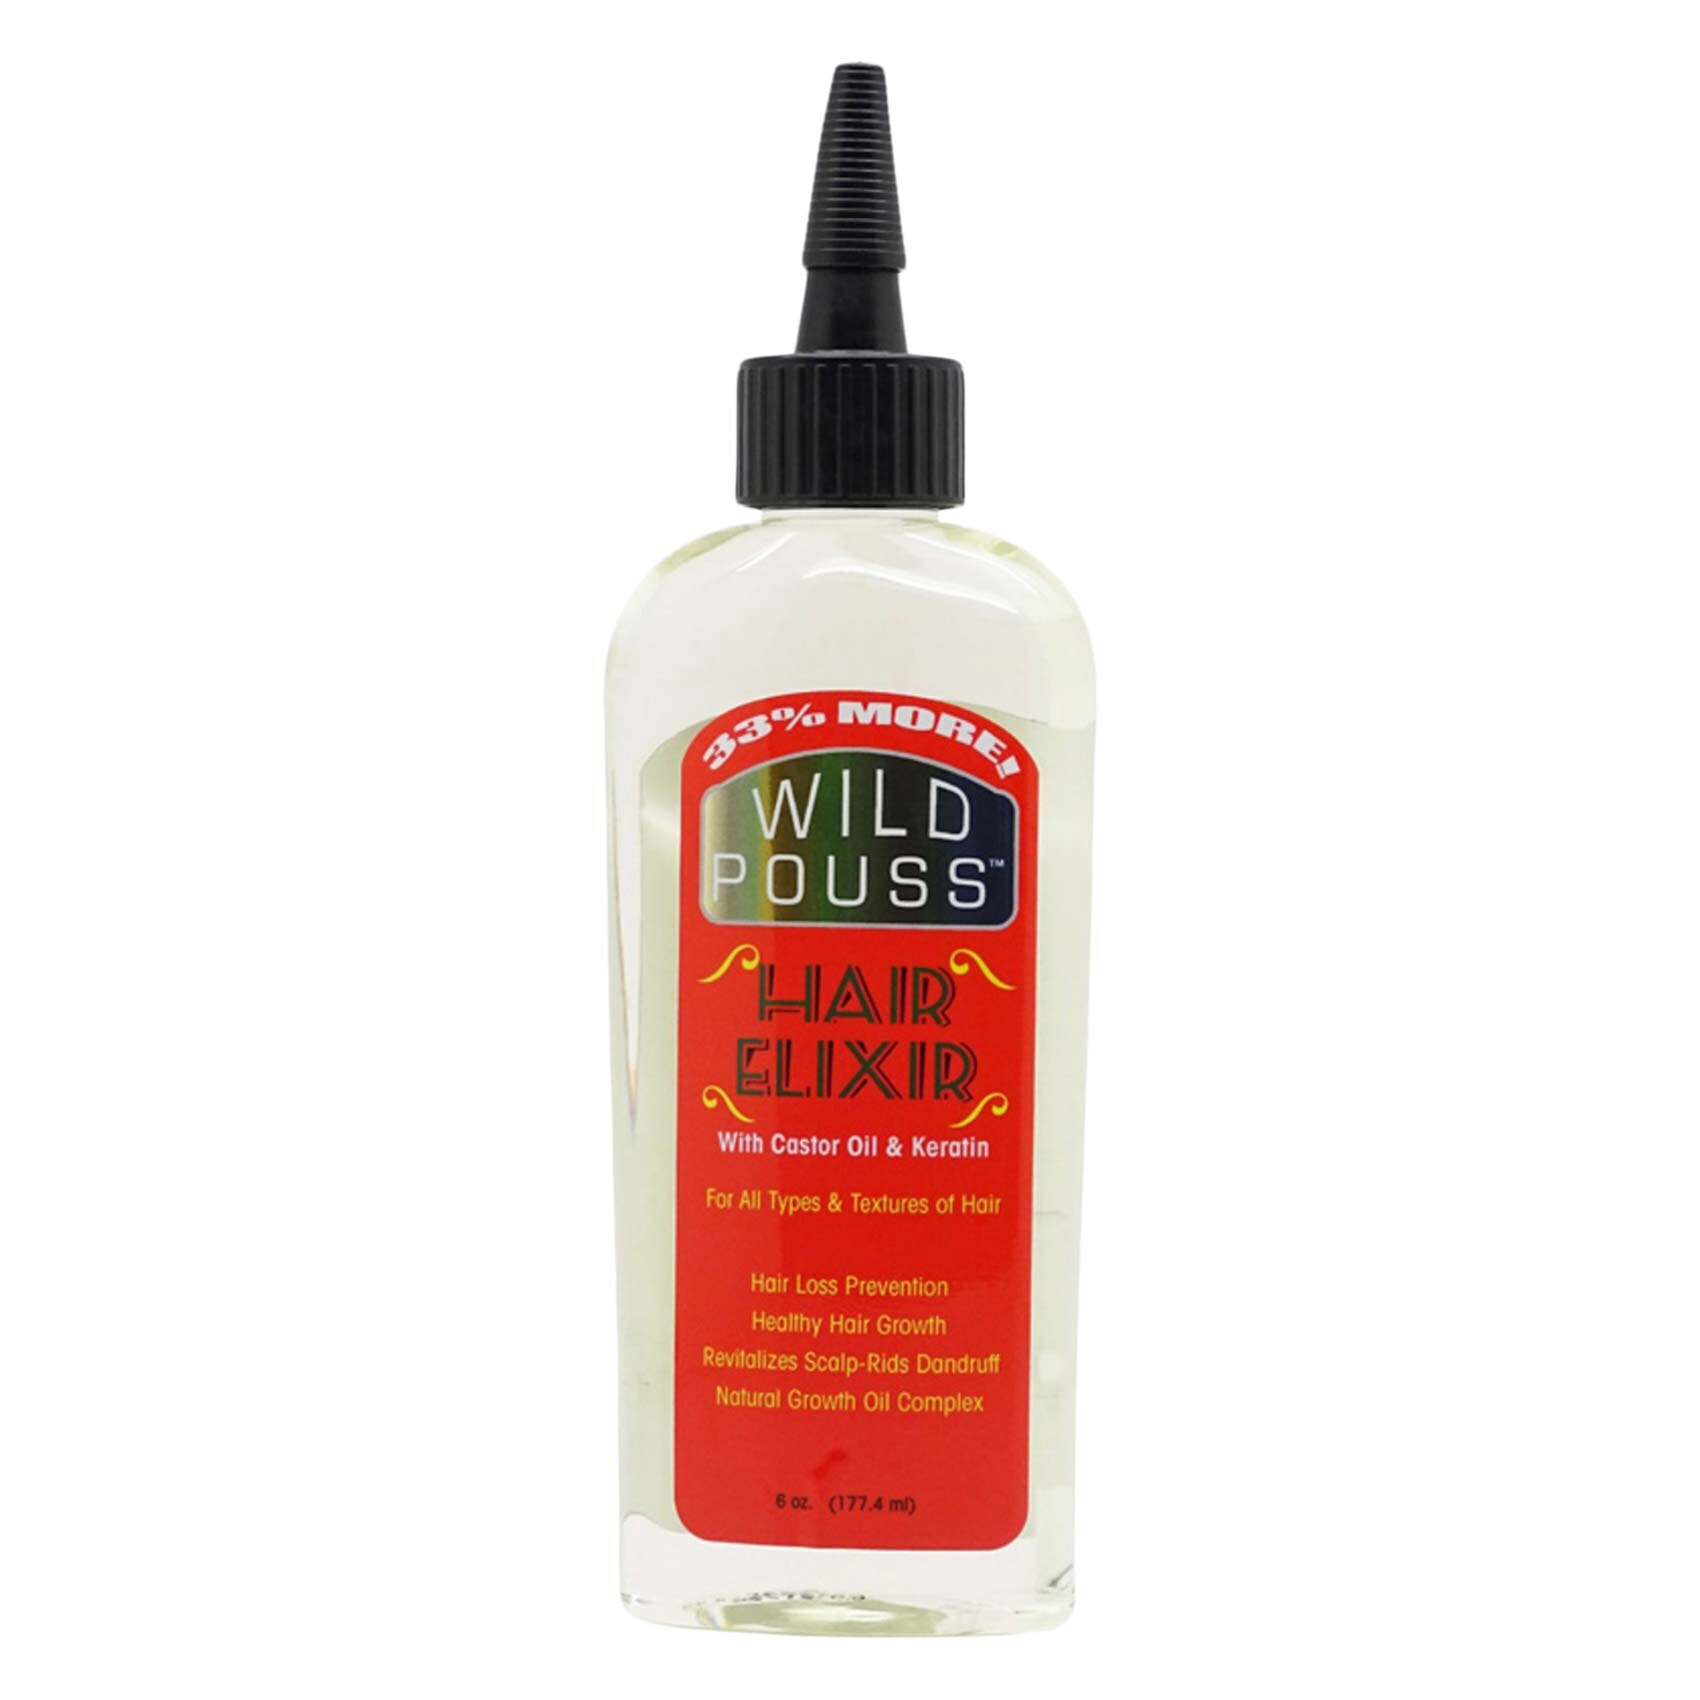 Wild Pouss Castor Oil And Keratin Hair Elixir 177ml